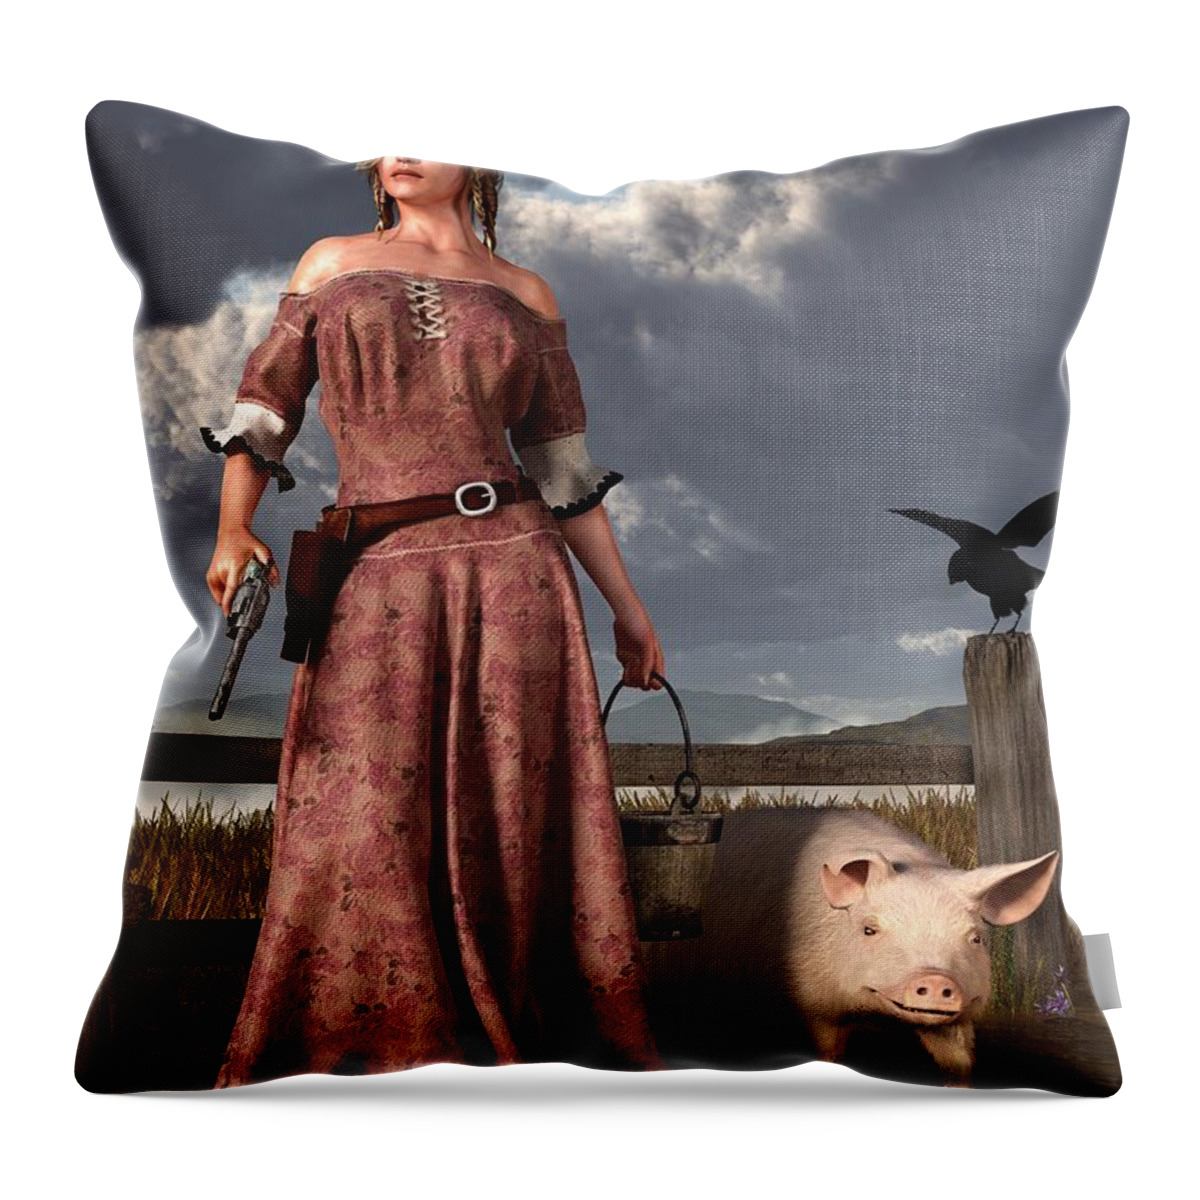  Pig Throw Pillow featuring the digital art Swineherdess by Daniel Eskridge